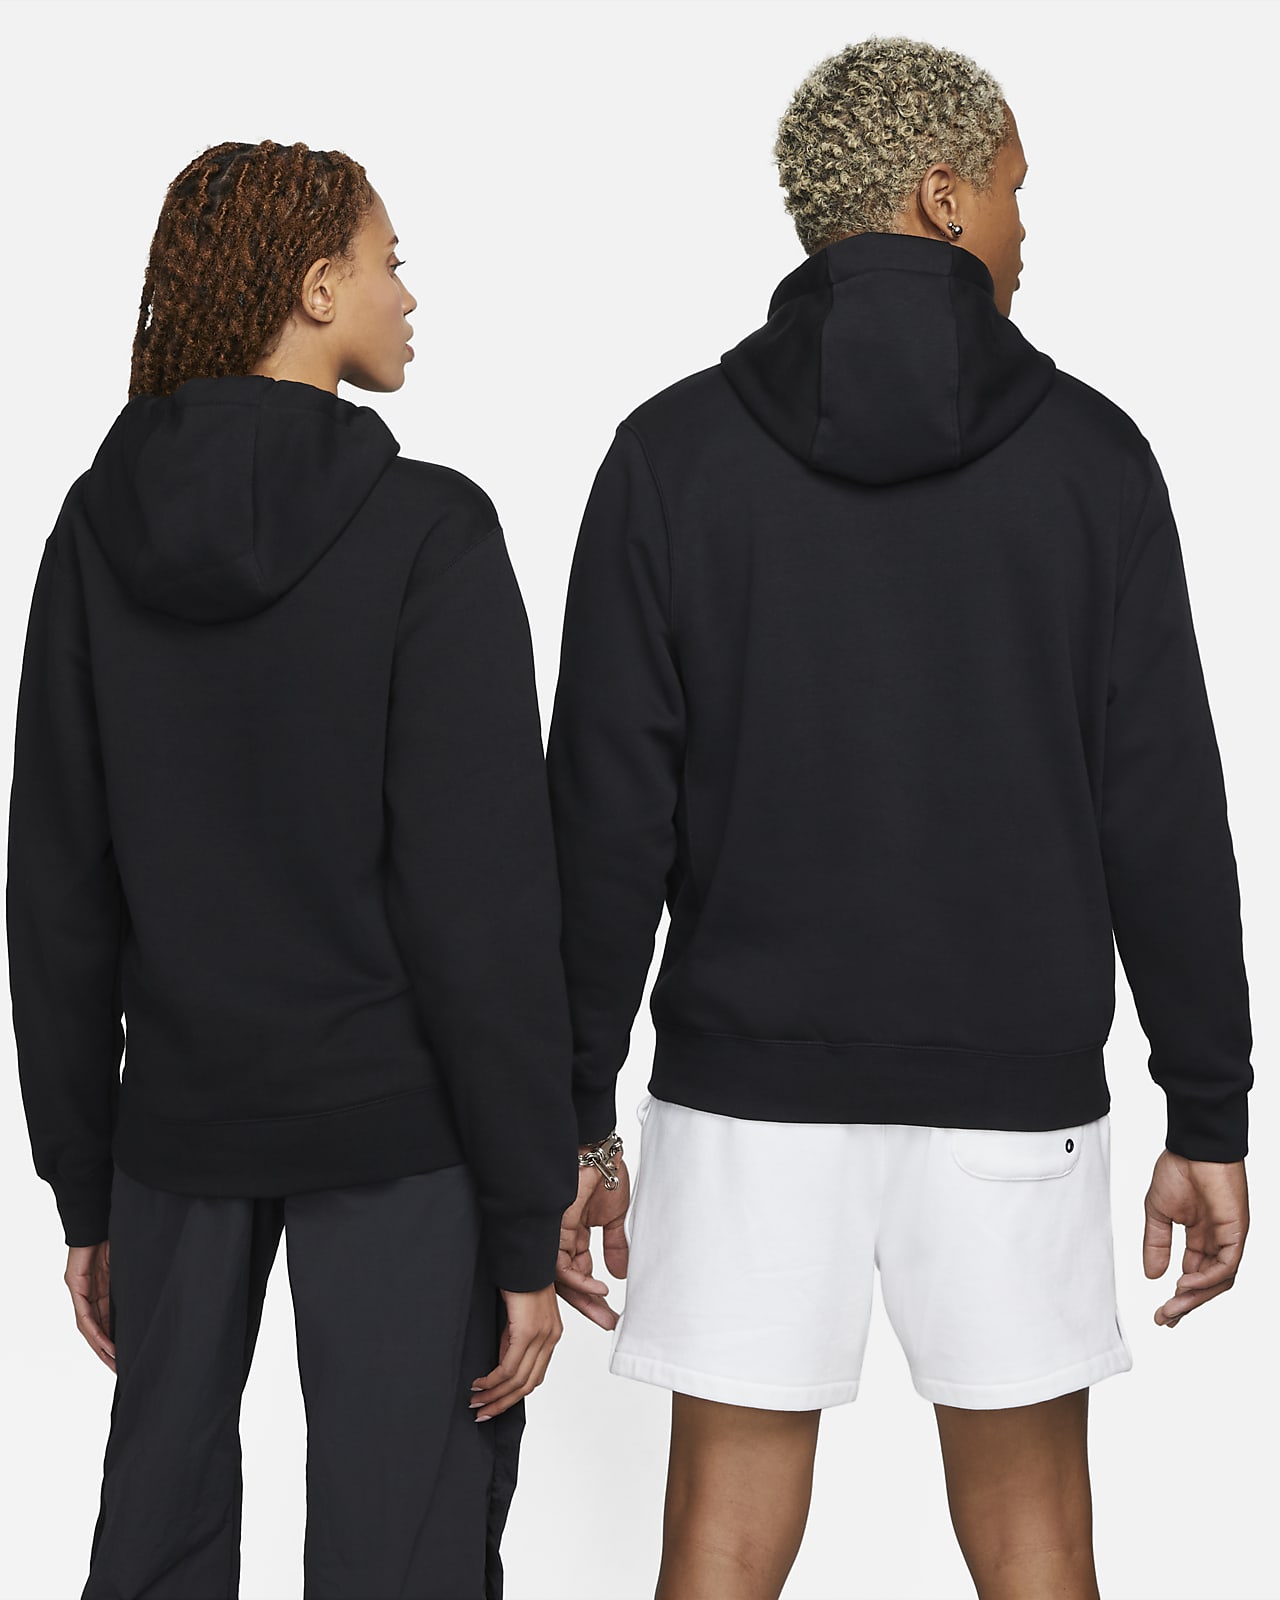 Nike Sportswear Club Fleece Pullover Hoodie - Black/White • Price »